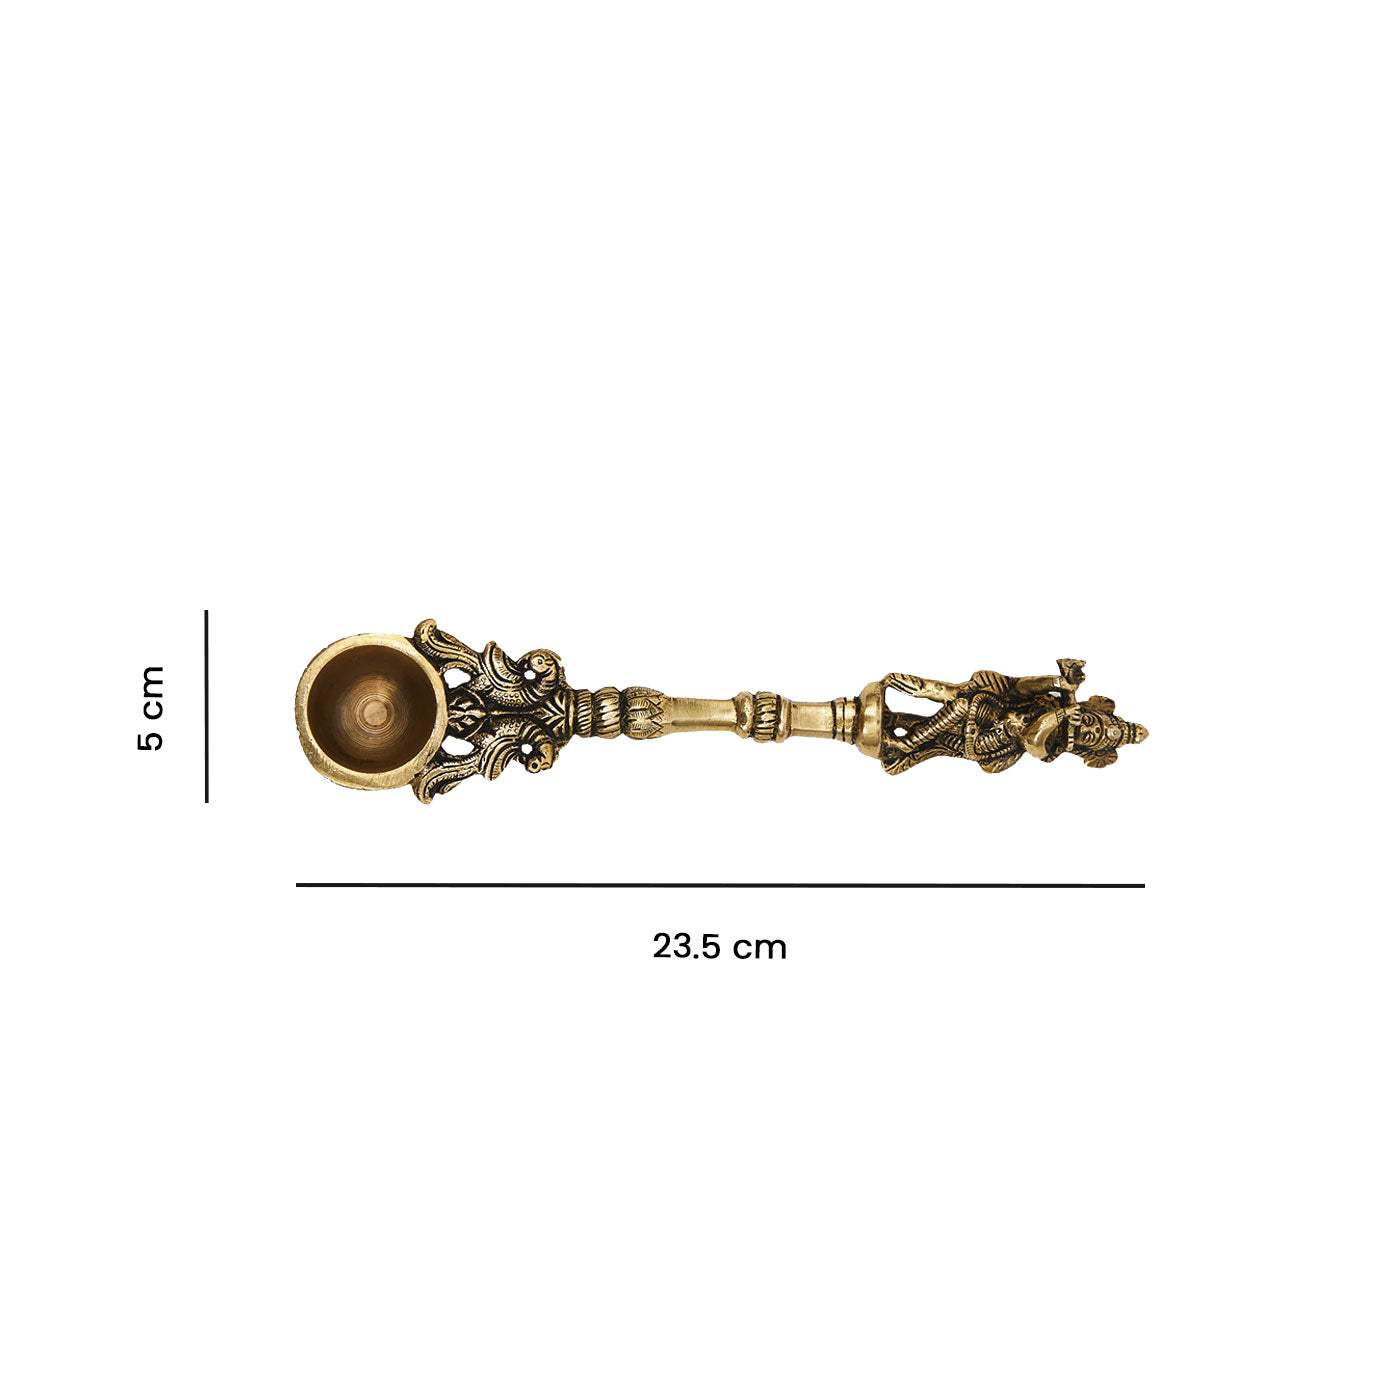 Brass Handcrafted Krishna Aarti Spoon